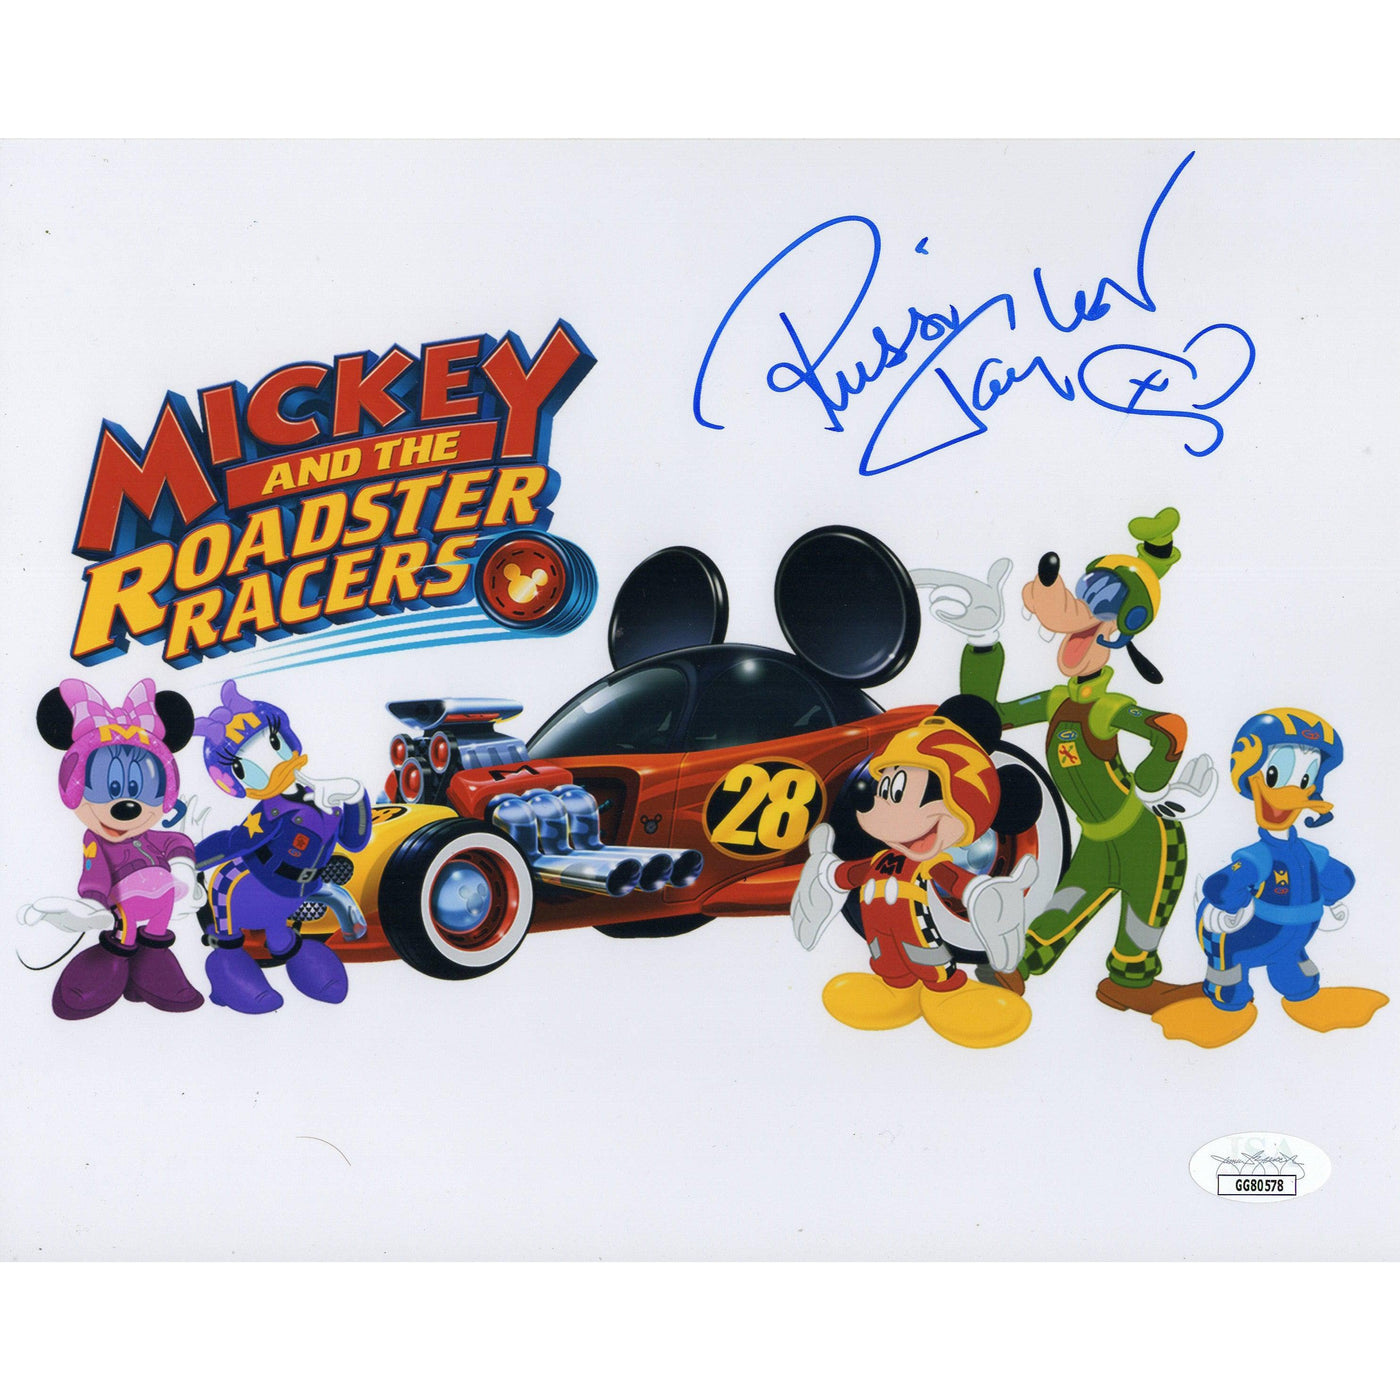 Russi Taylor Autograph 8x10 Photo Disney Voice of Minnie Mouse Signed JSA COA